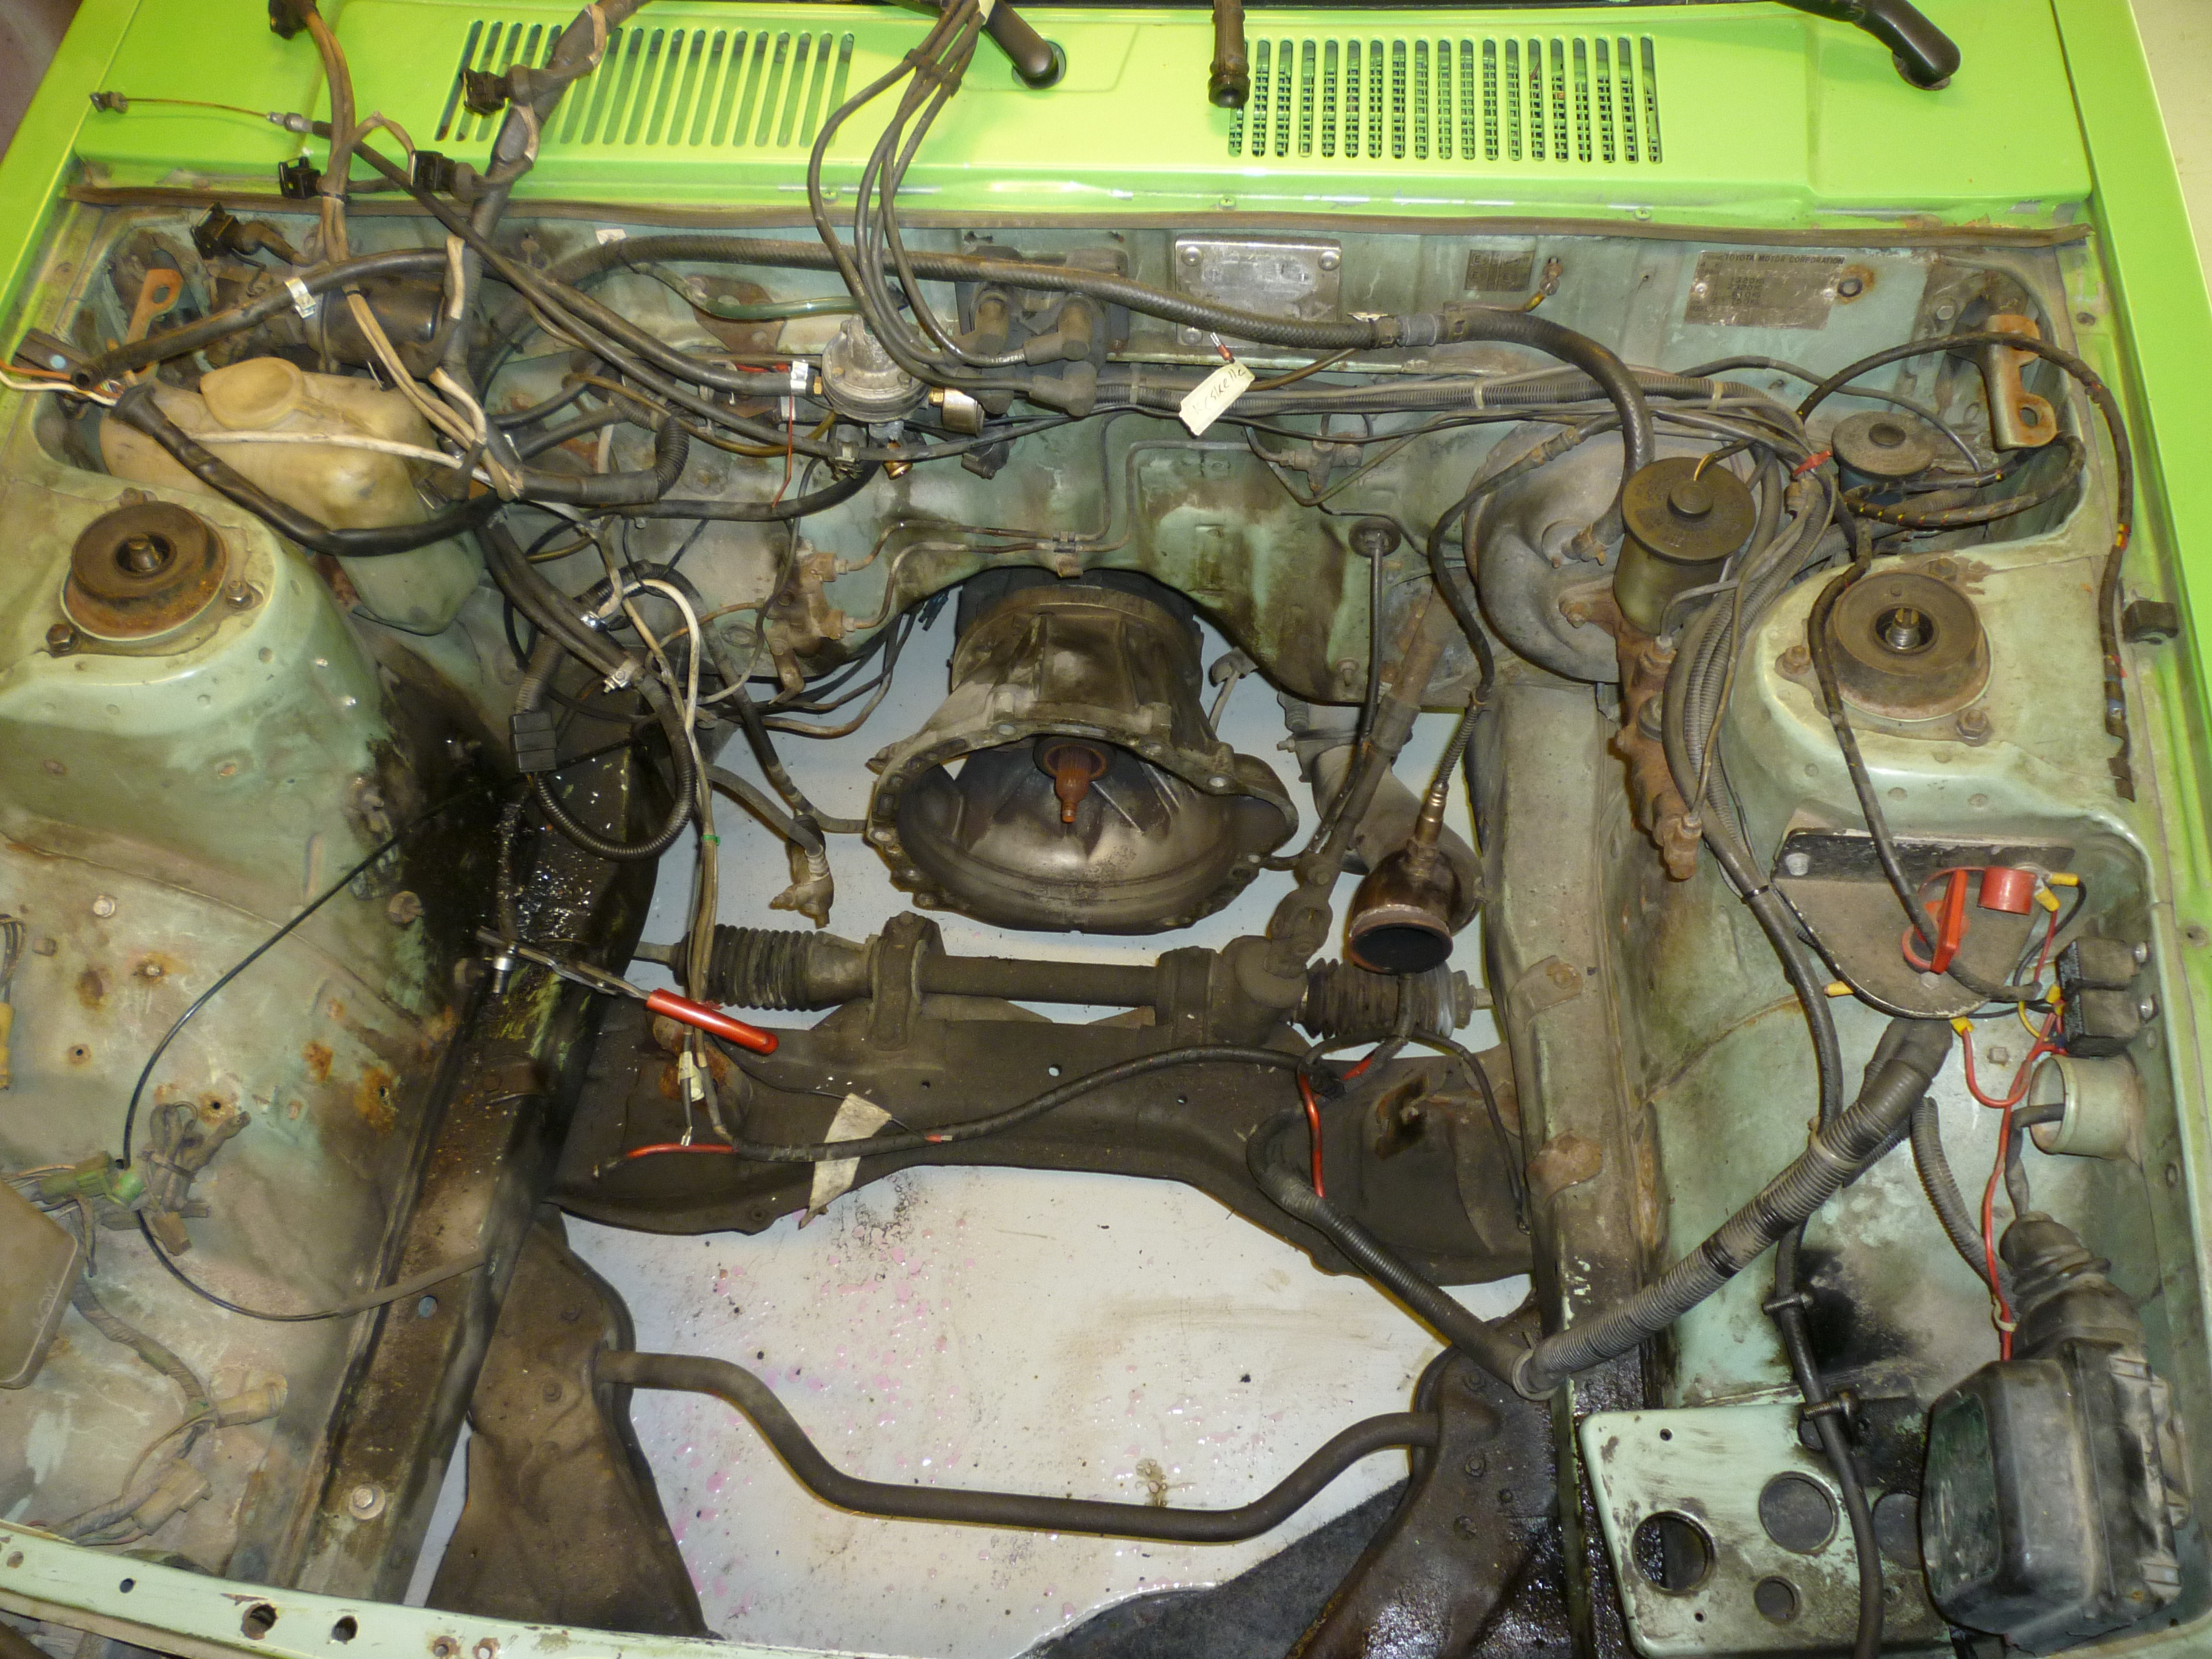 Turbo dx -83, Moottori puuttuu